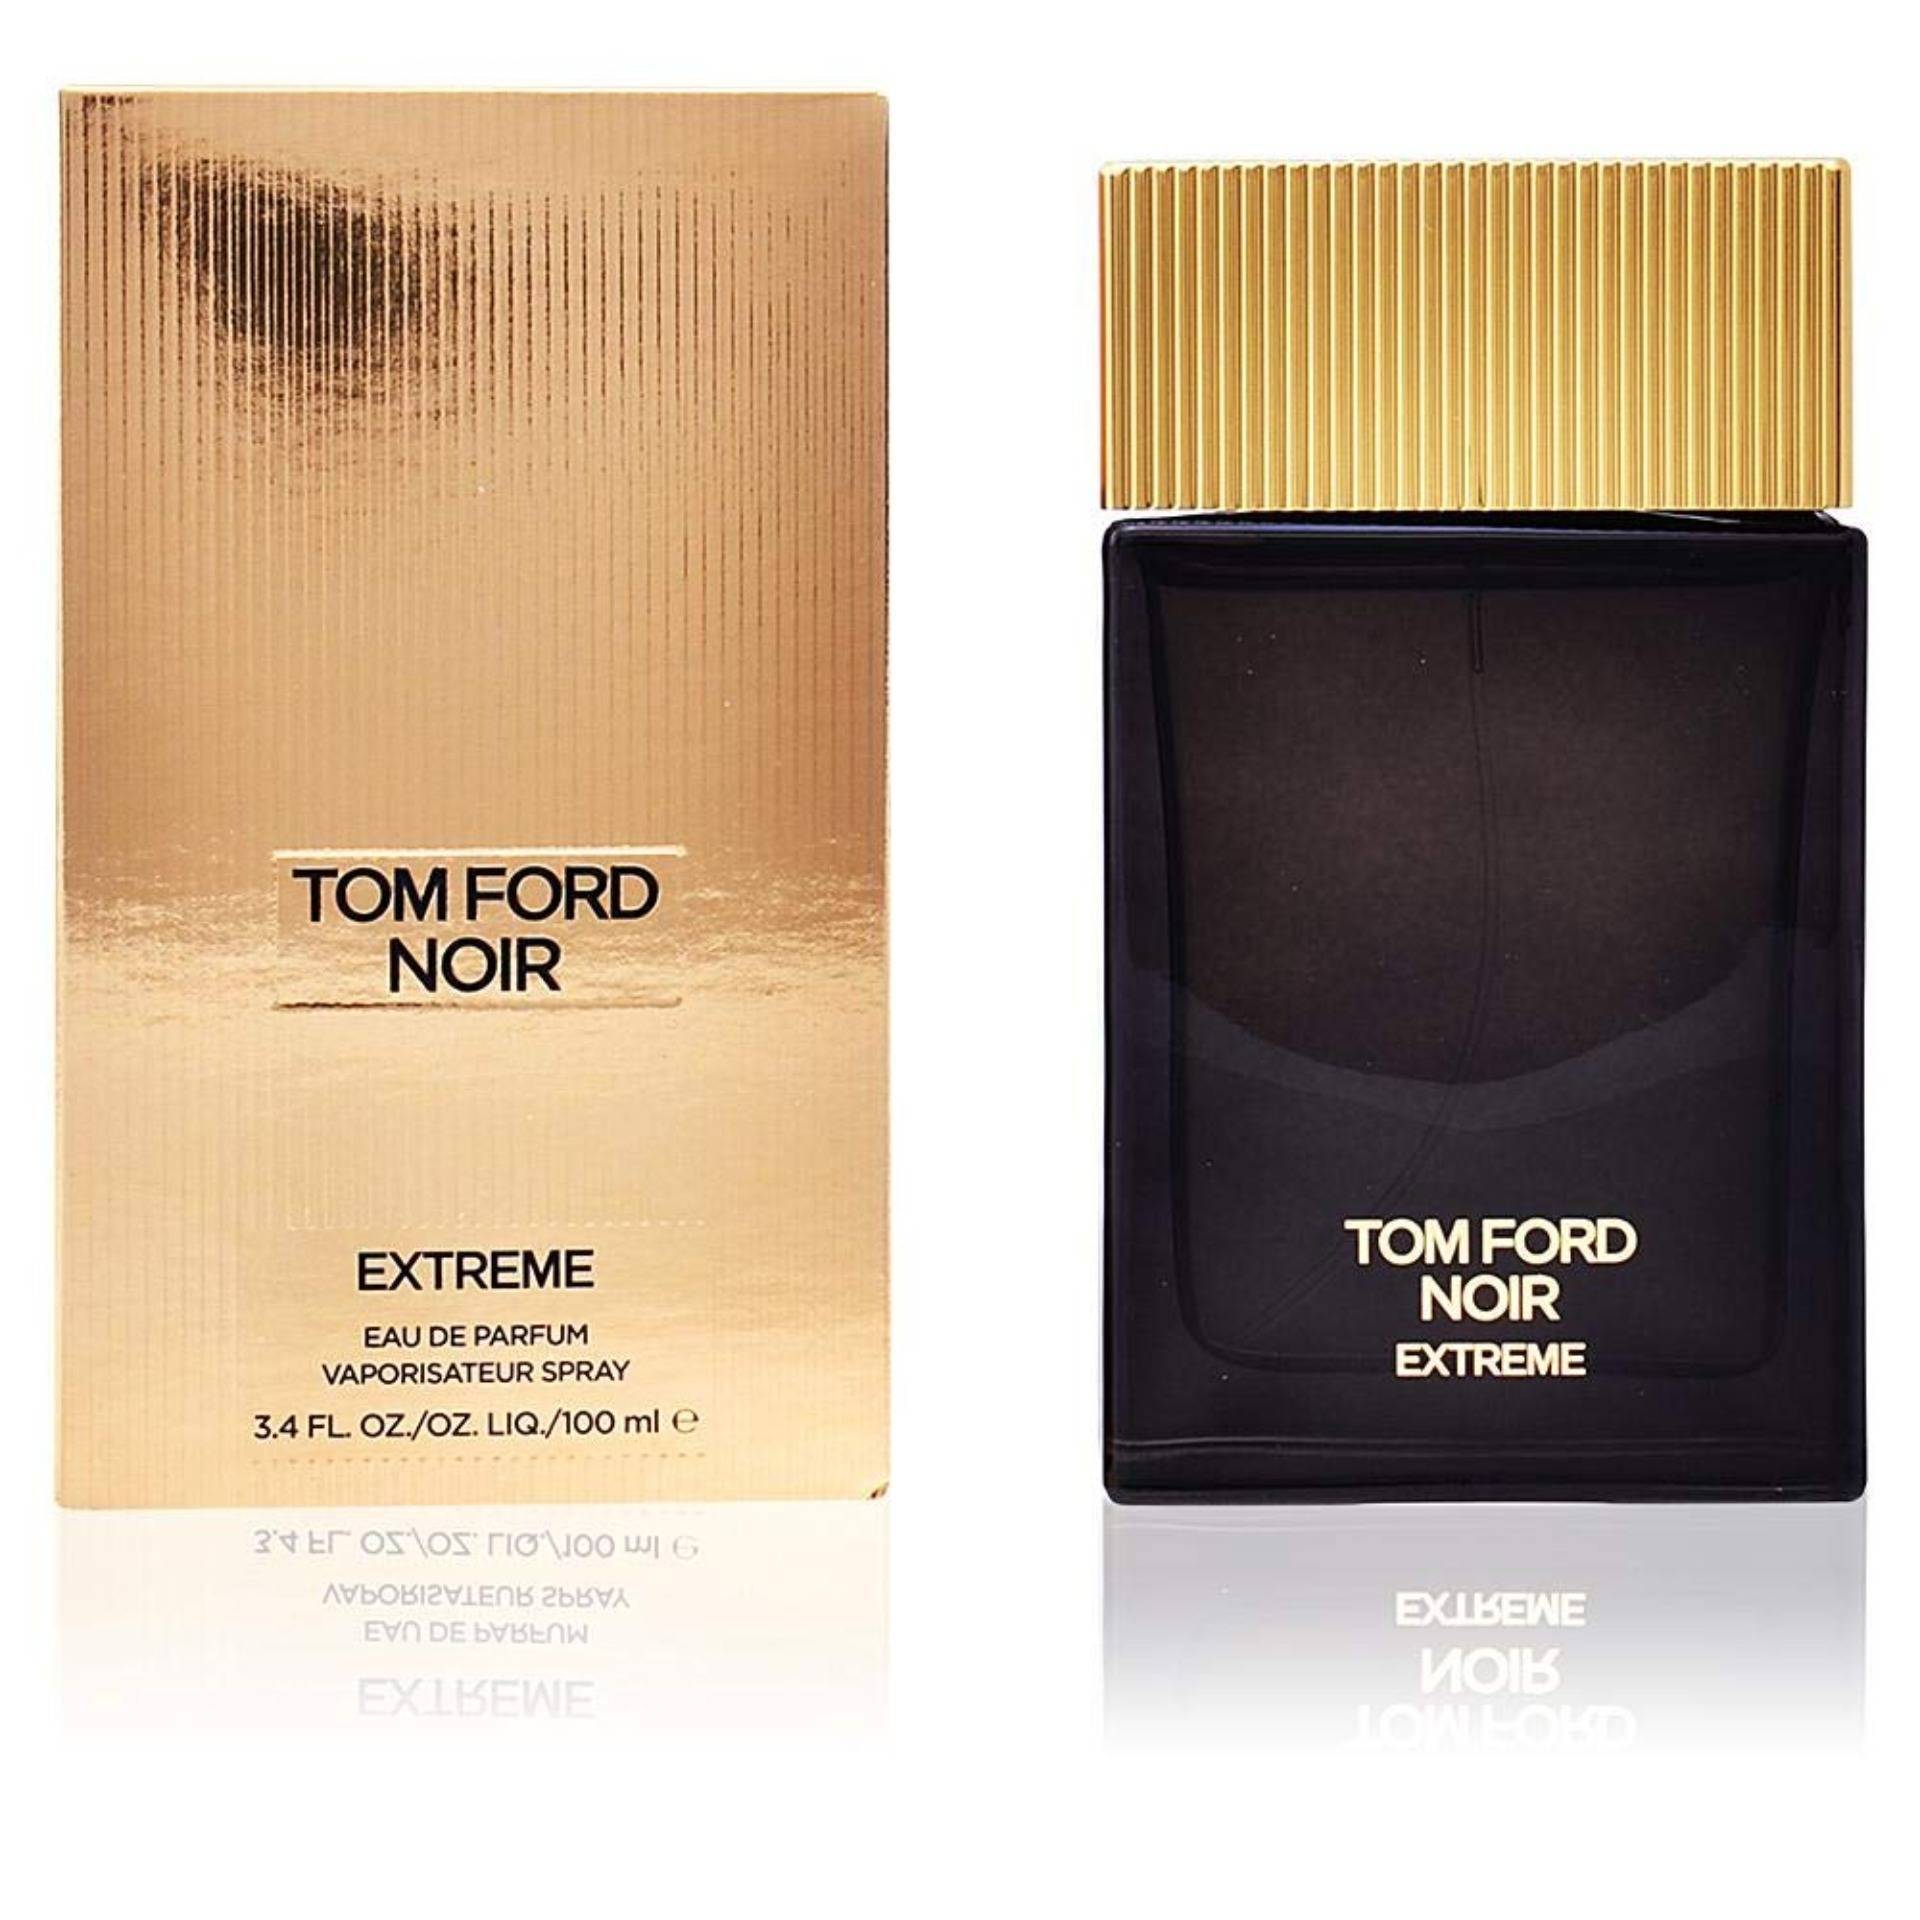 Tom Ford Noir Extreme EDP Perfume For Men - 100ml - Leyjao.pk